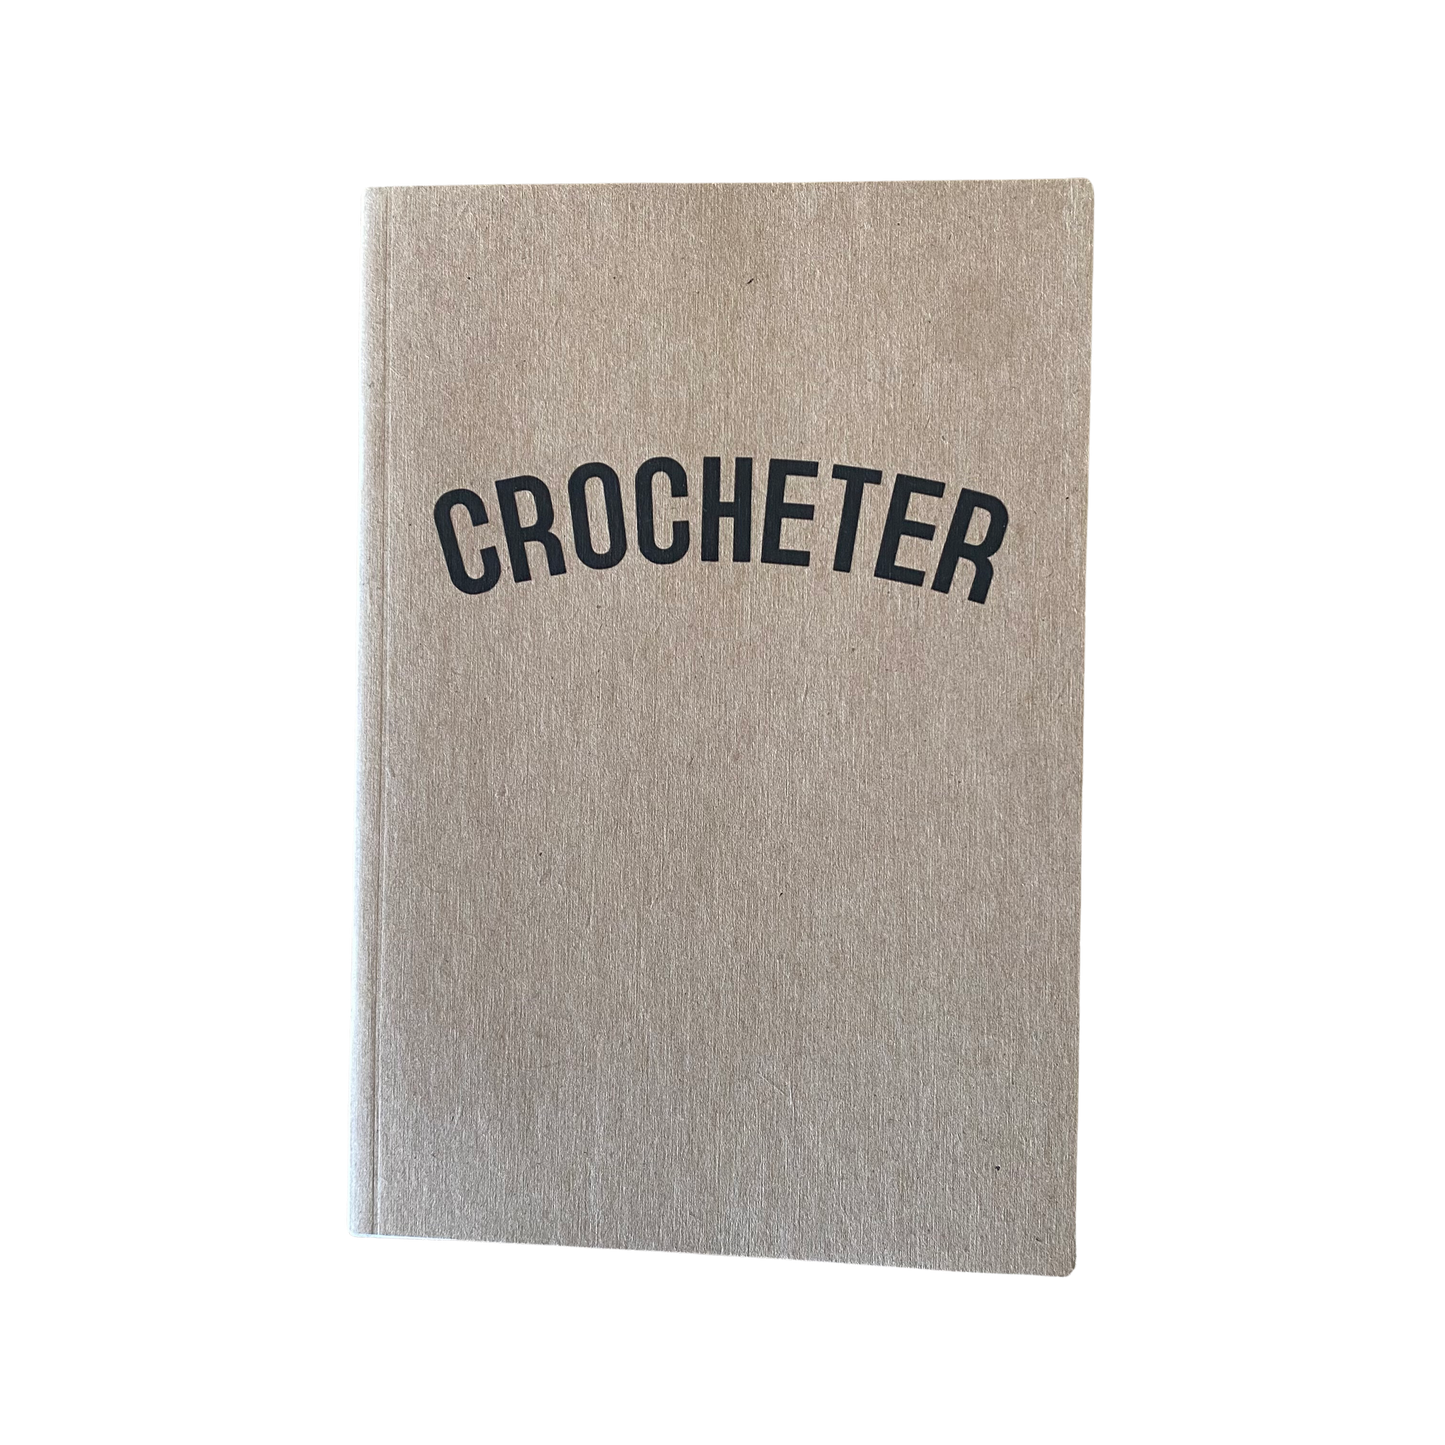 Stitchers Tees - Notebooks